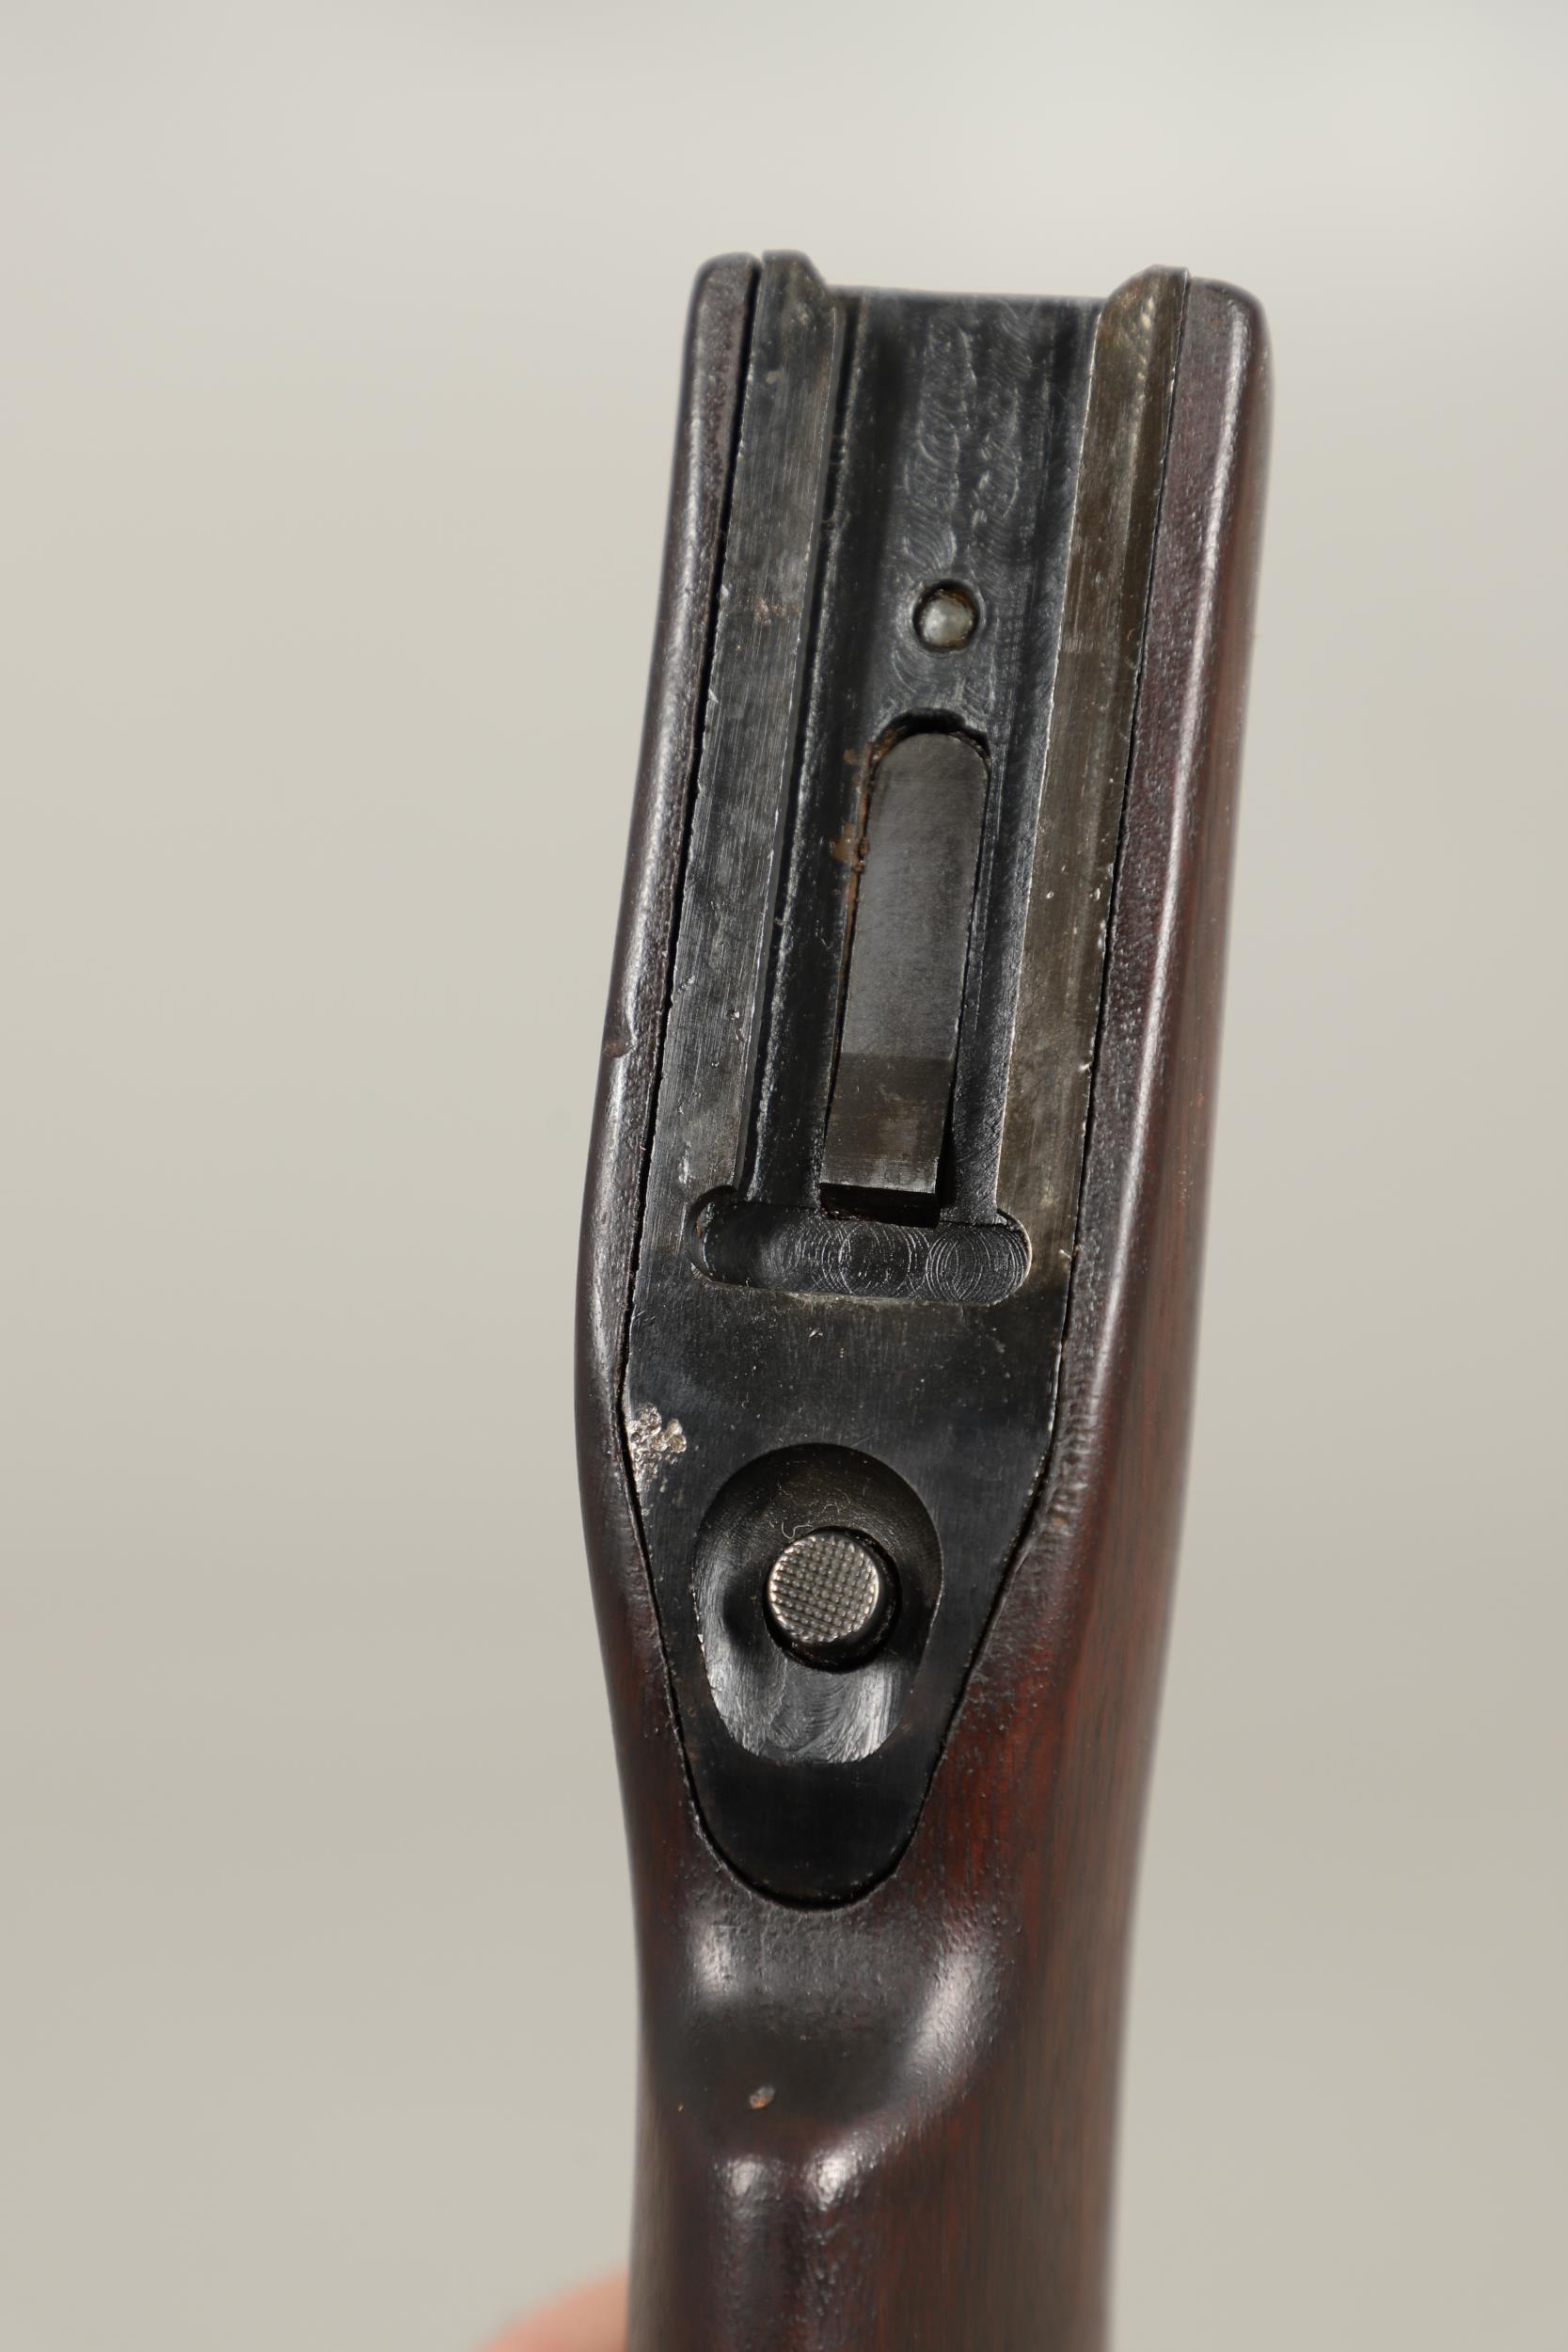 A DEACTIVATED AUTO-ORDNANCE CORPORATION THOMPSON .45 ACP SUBMACHINE GUN. - Image 25 of 29